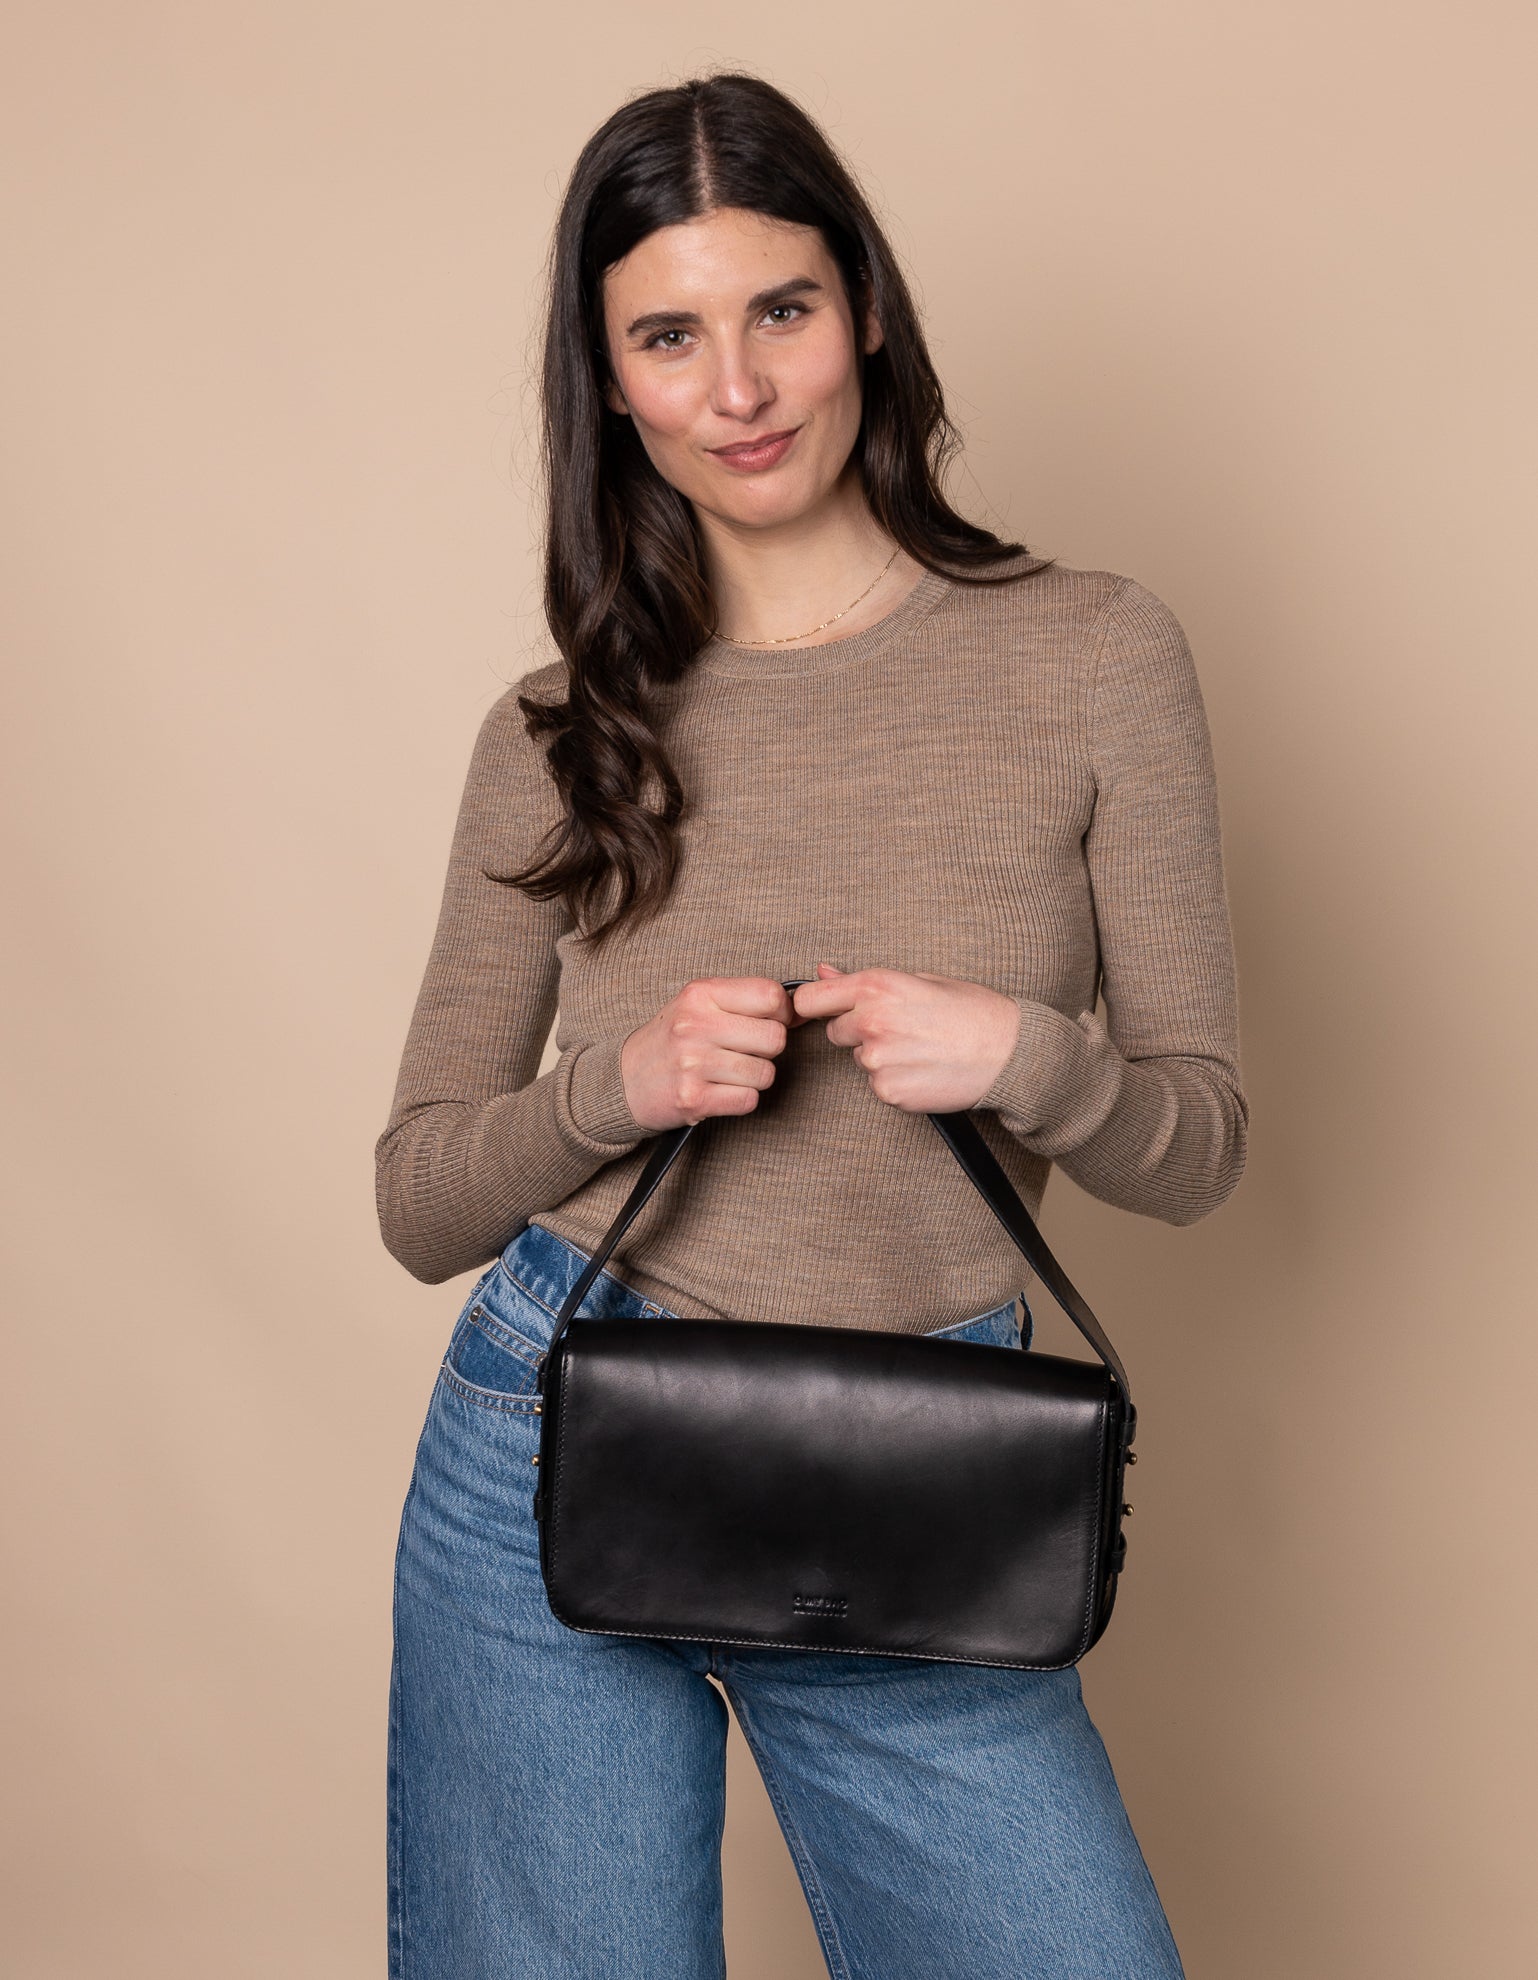 Black Longuette Leather womens handbag. Square shape with an adjustable strap. Model image